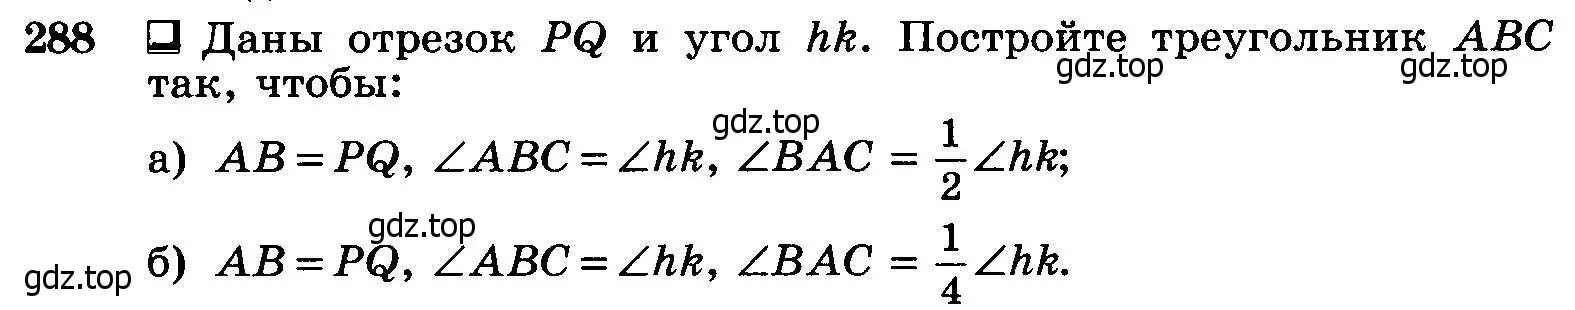 Условие номер 288 (страница 87) гдз по геометрии 7-9 класс Атанасян, Бутузов, учебник